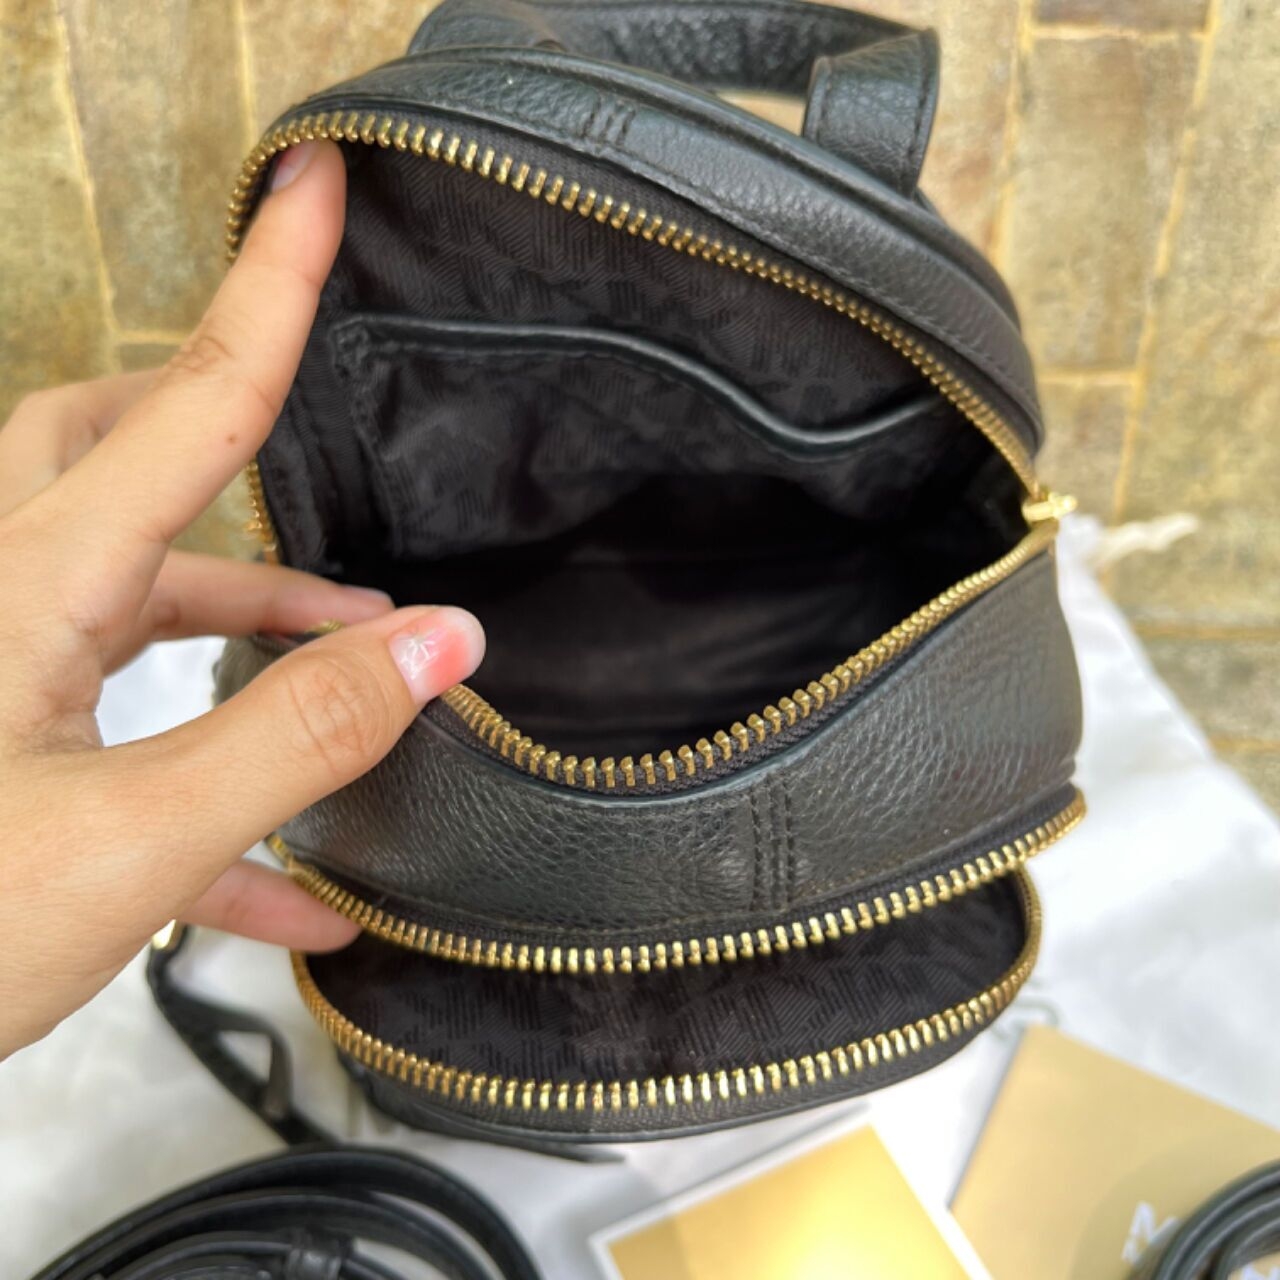 Michael Kors Rhea Convertible Black Backpack